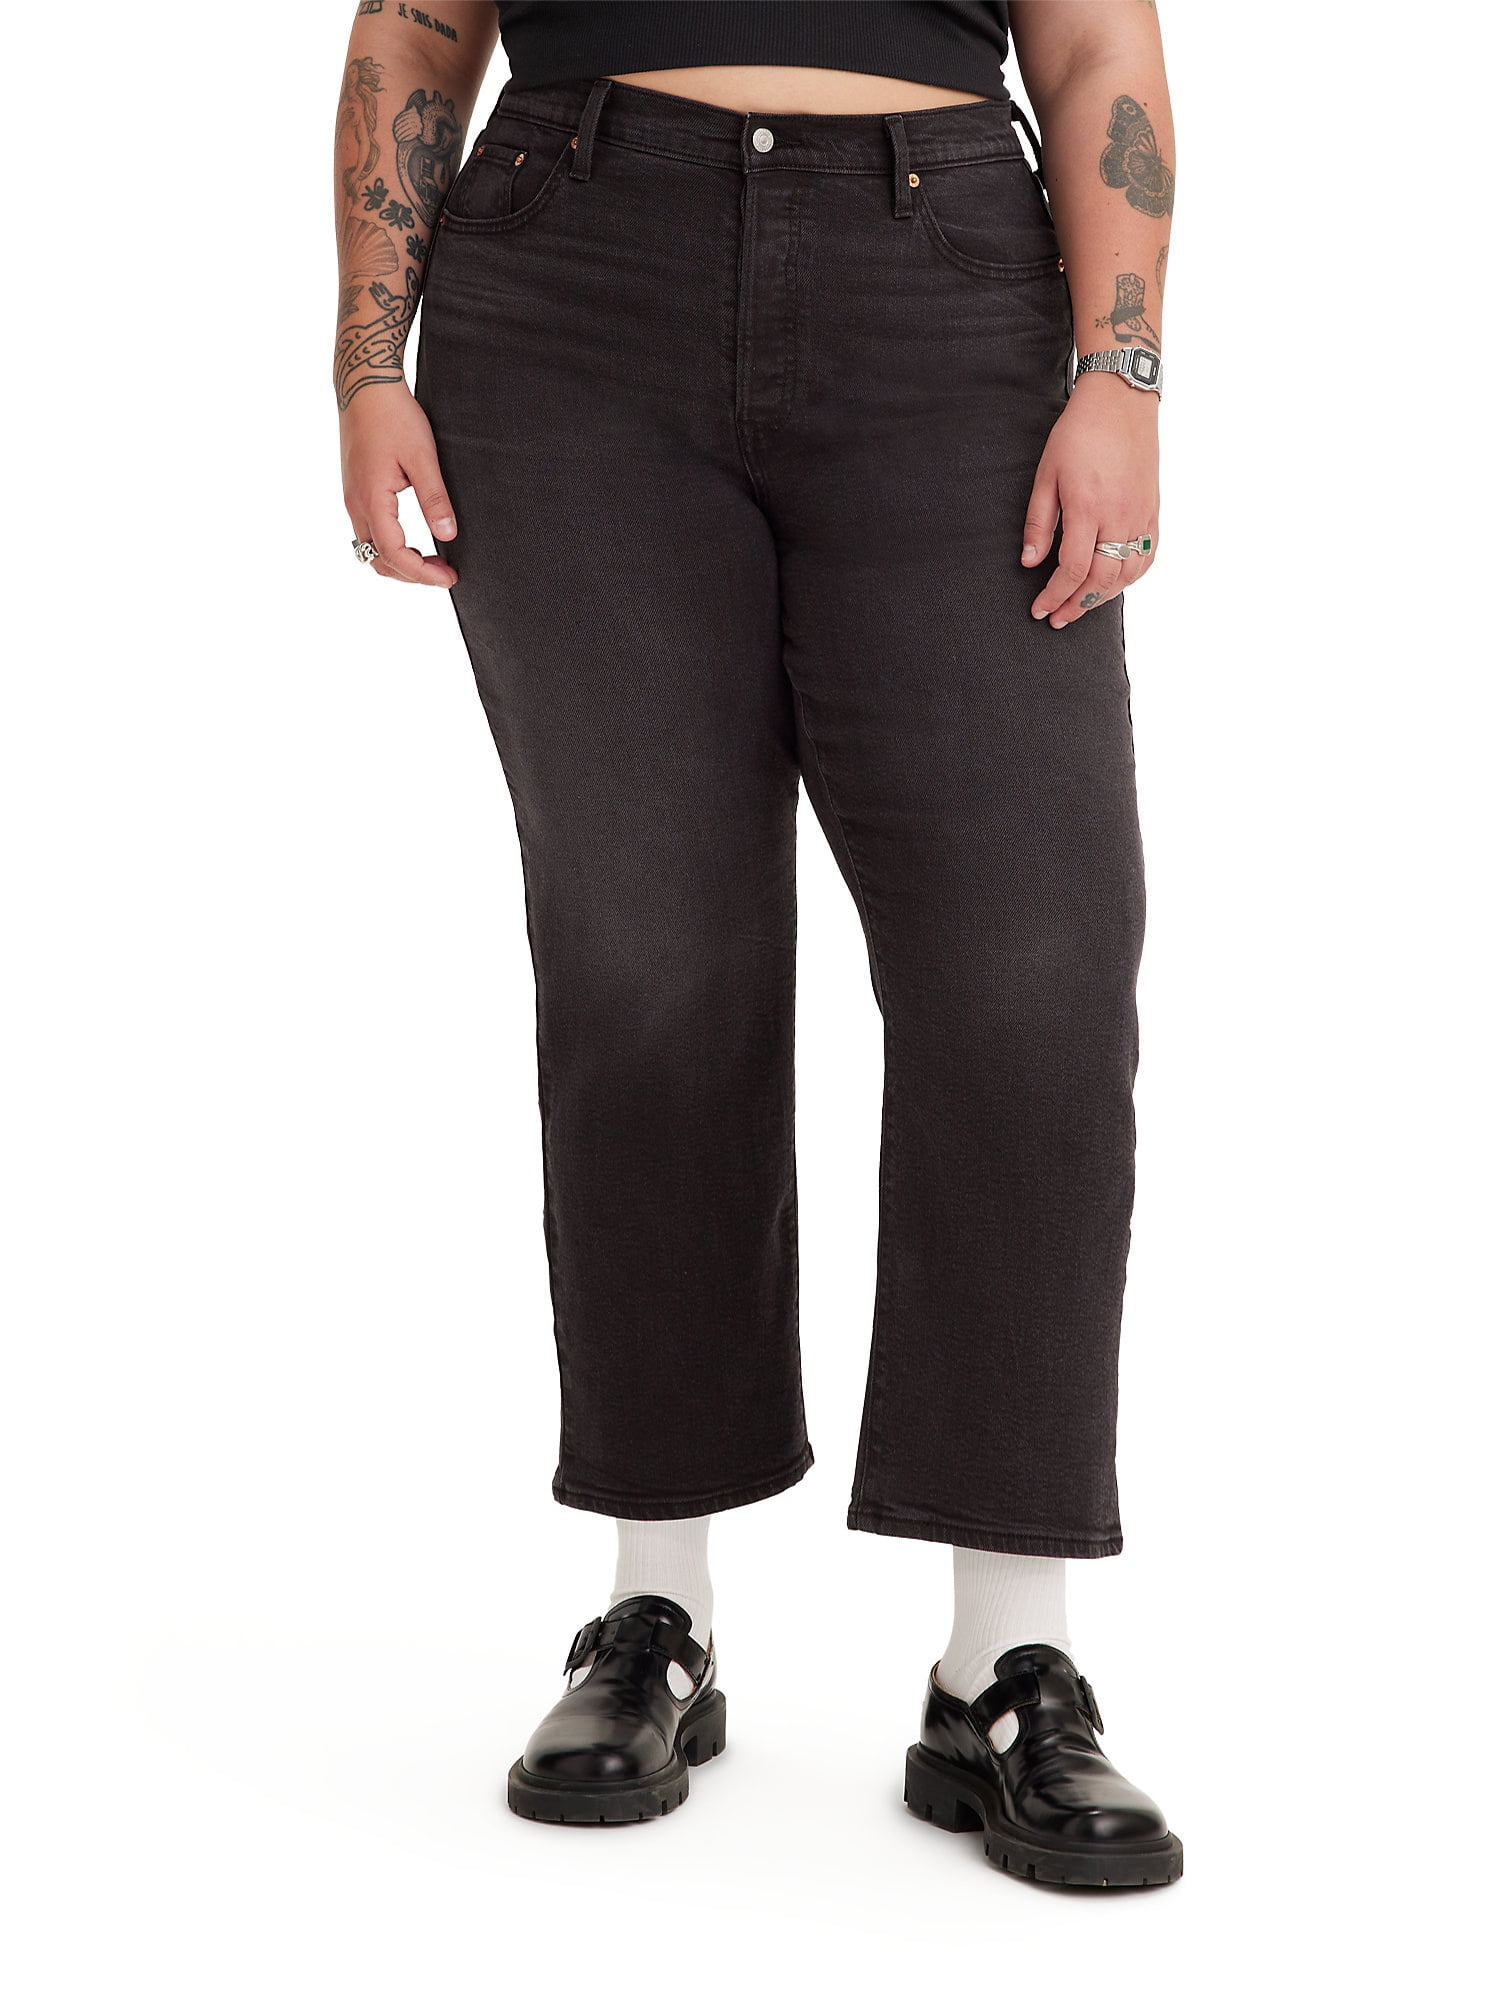 Levi's Women's Premium Plus-Size Ribcage Straight Ankle Jean, (New